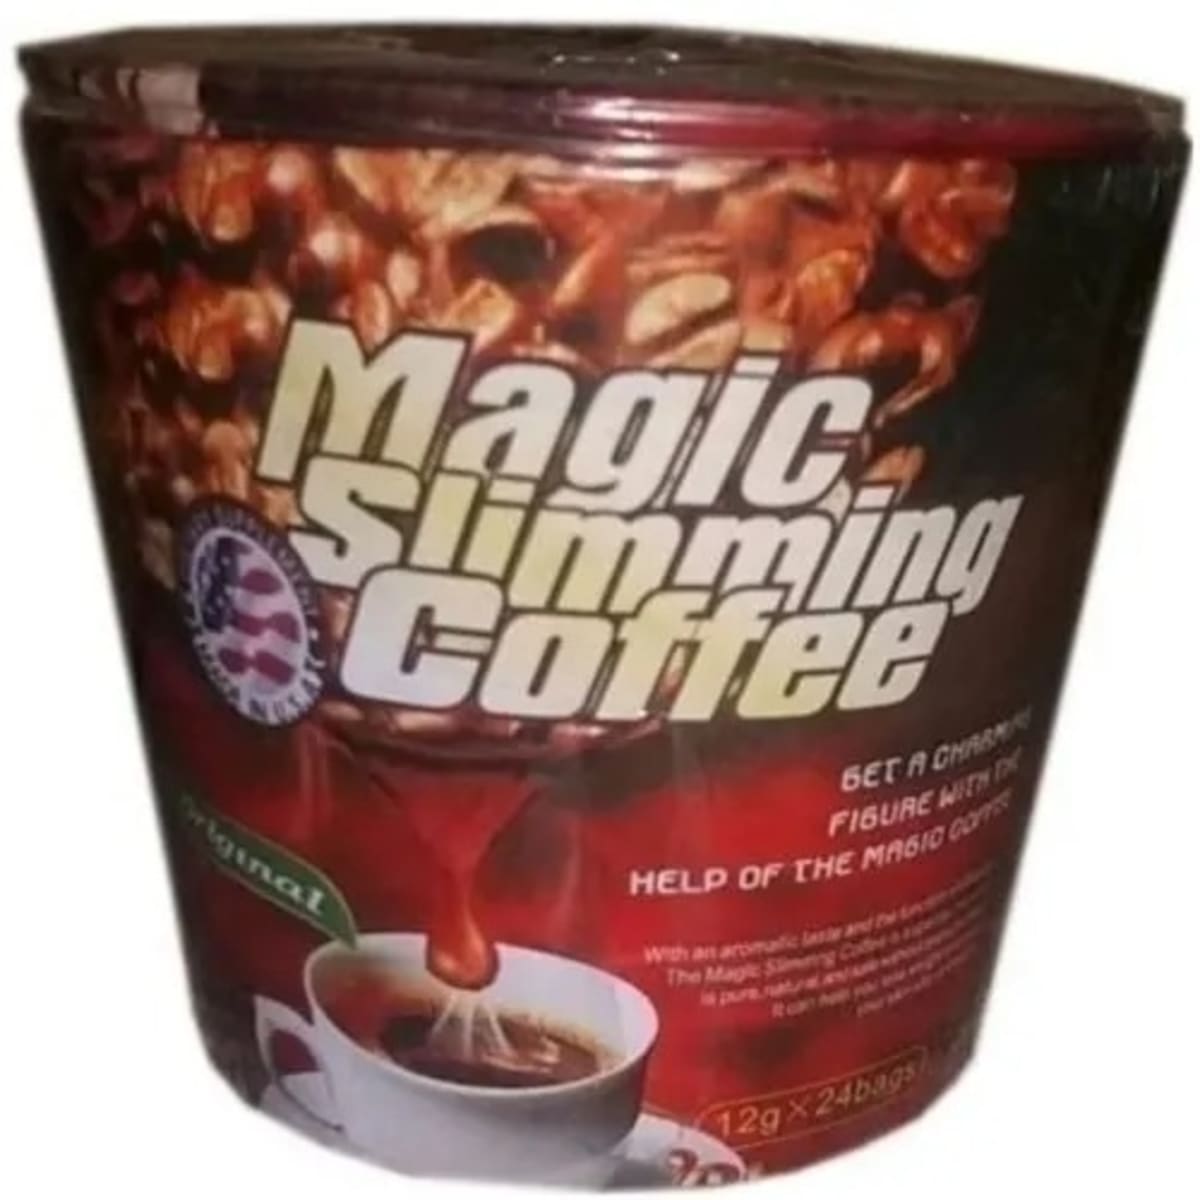 Magic Slimming Coffee - 12g X 24bags - Pack Of 2